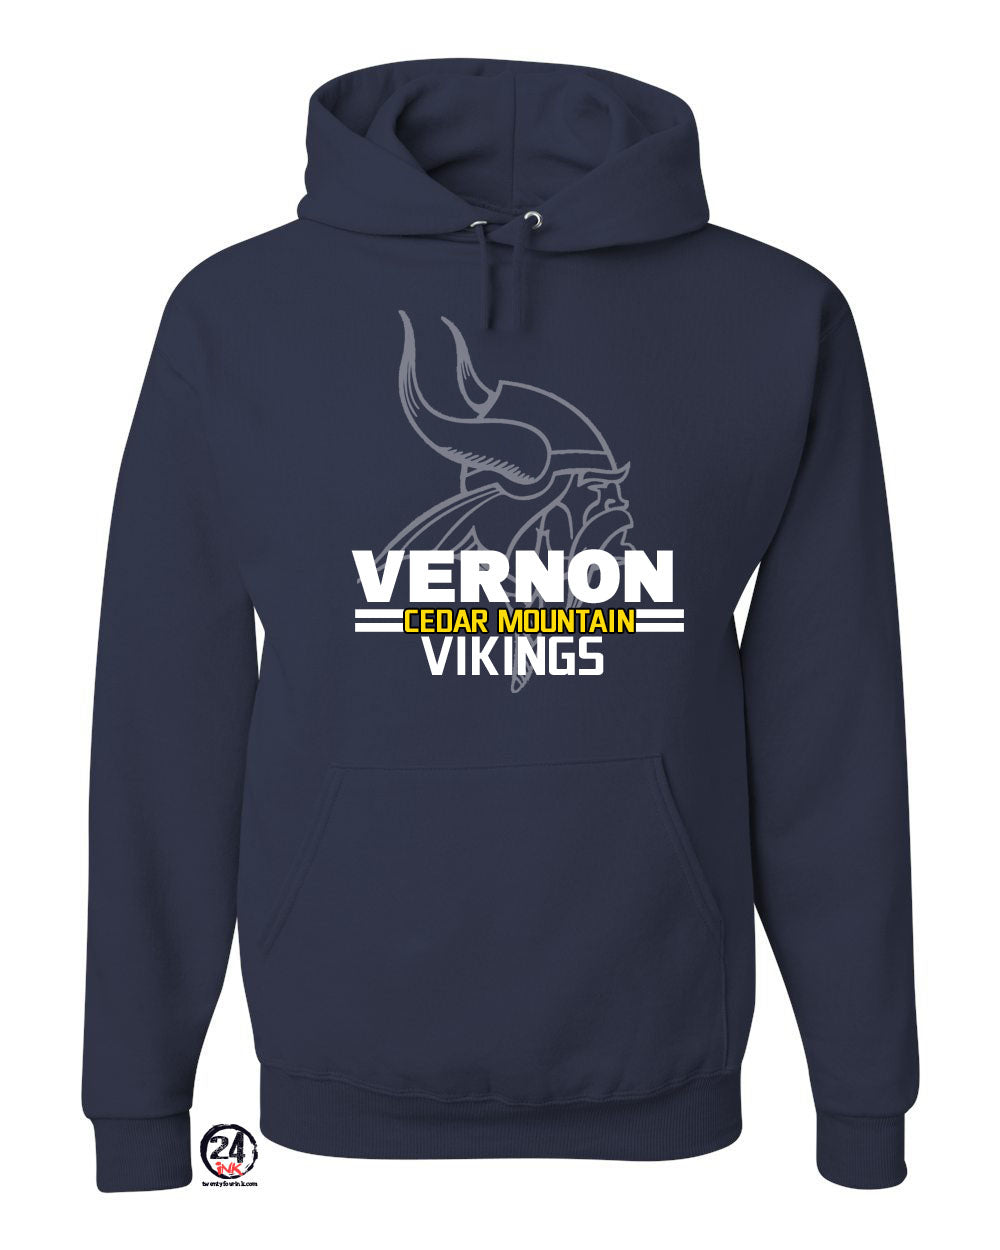 Vernon design 9 Hooded Sweatshirt